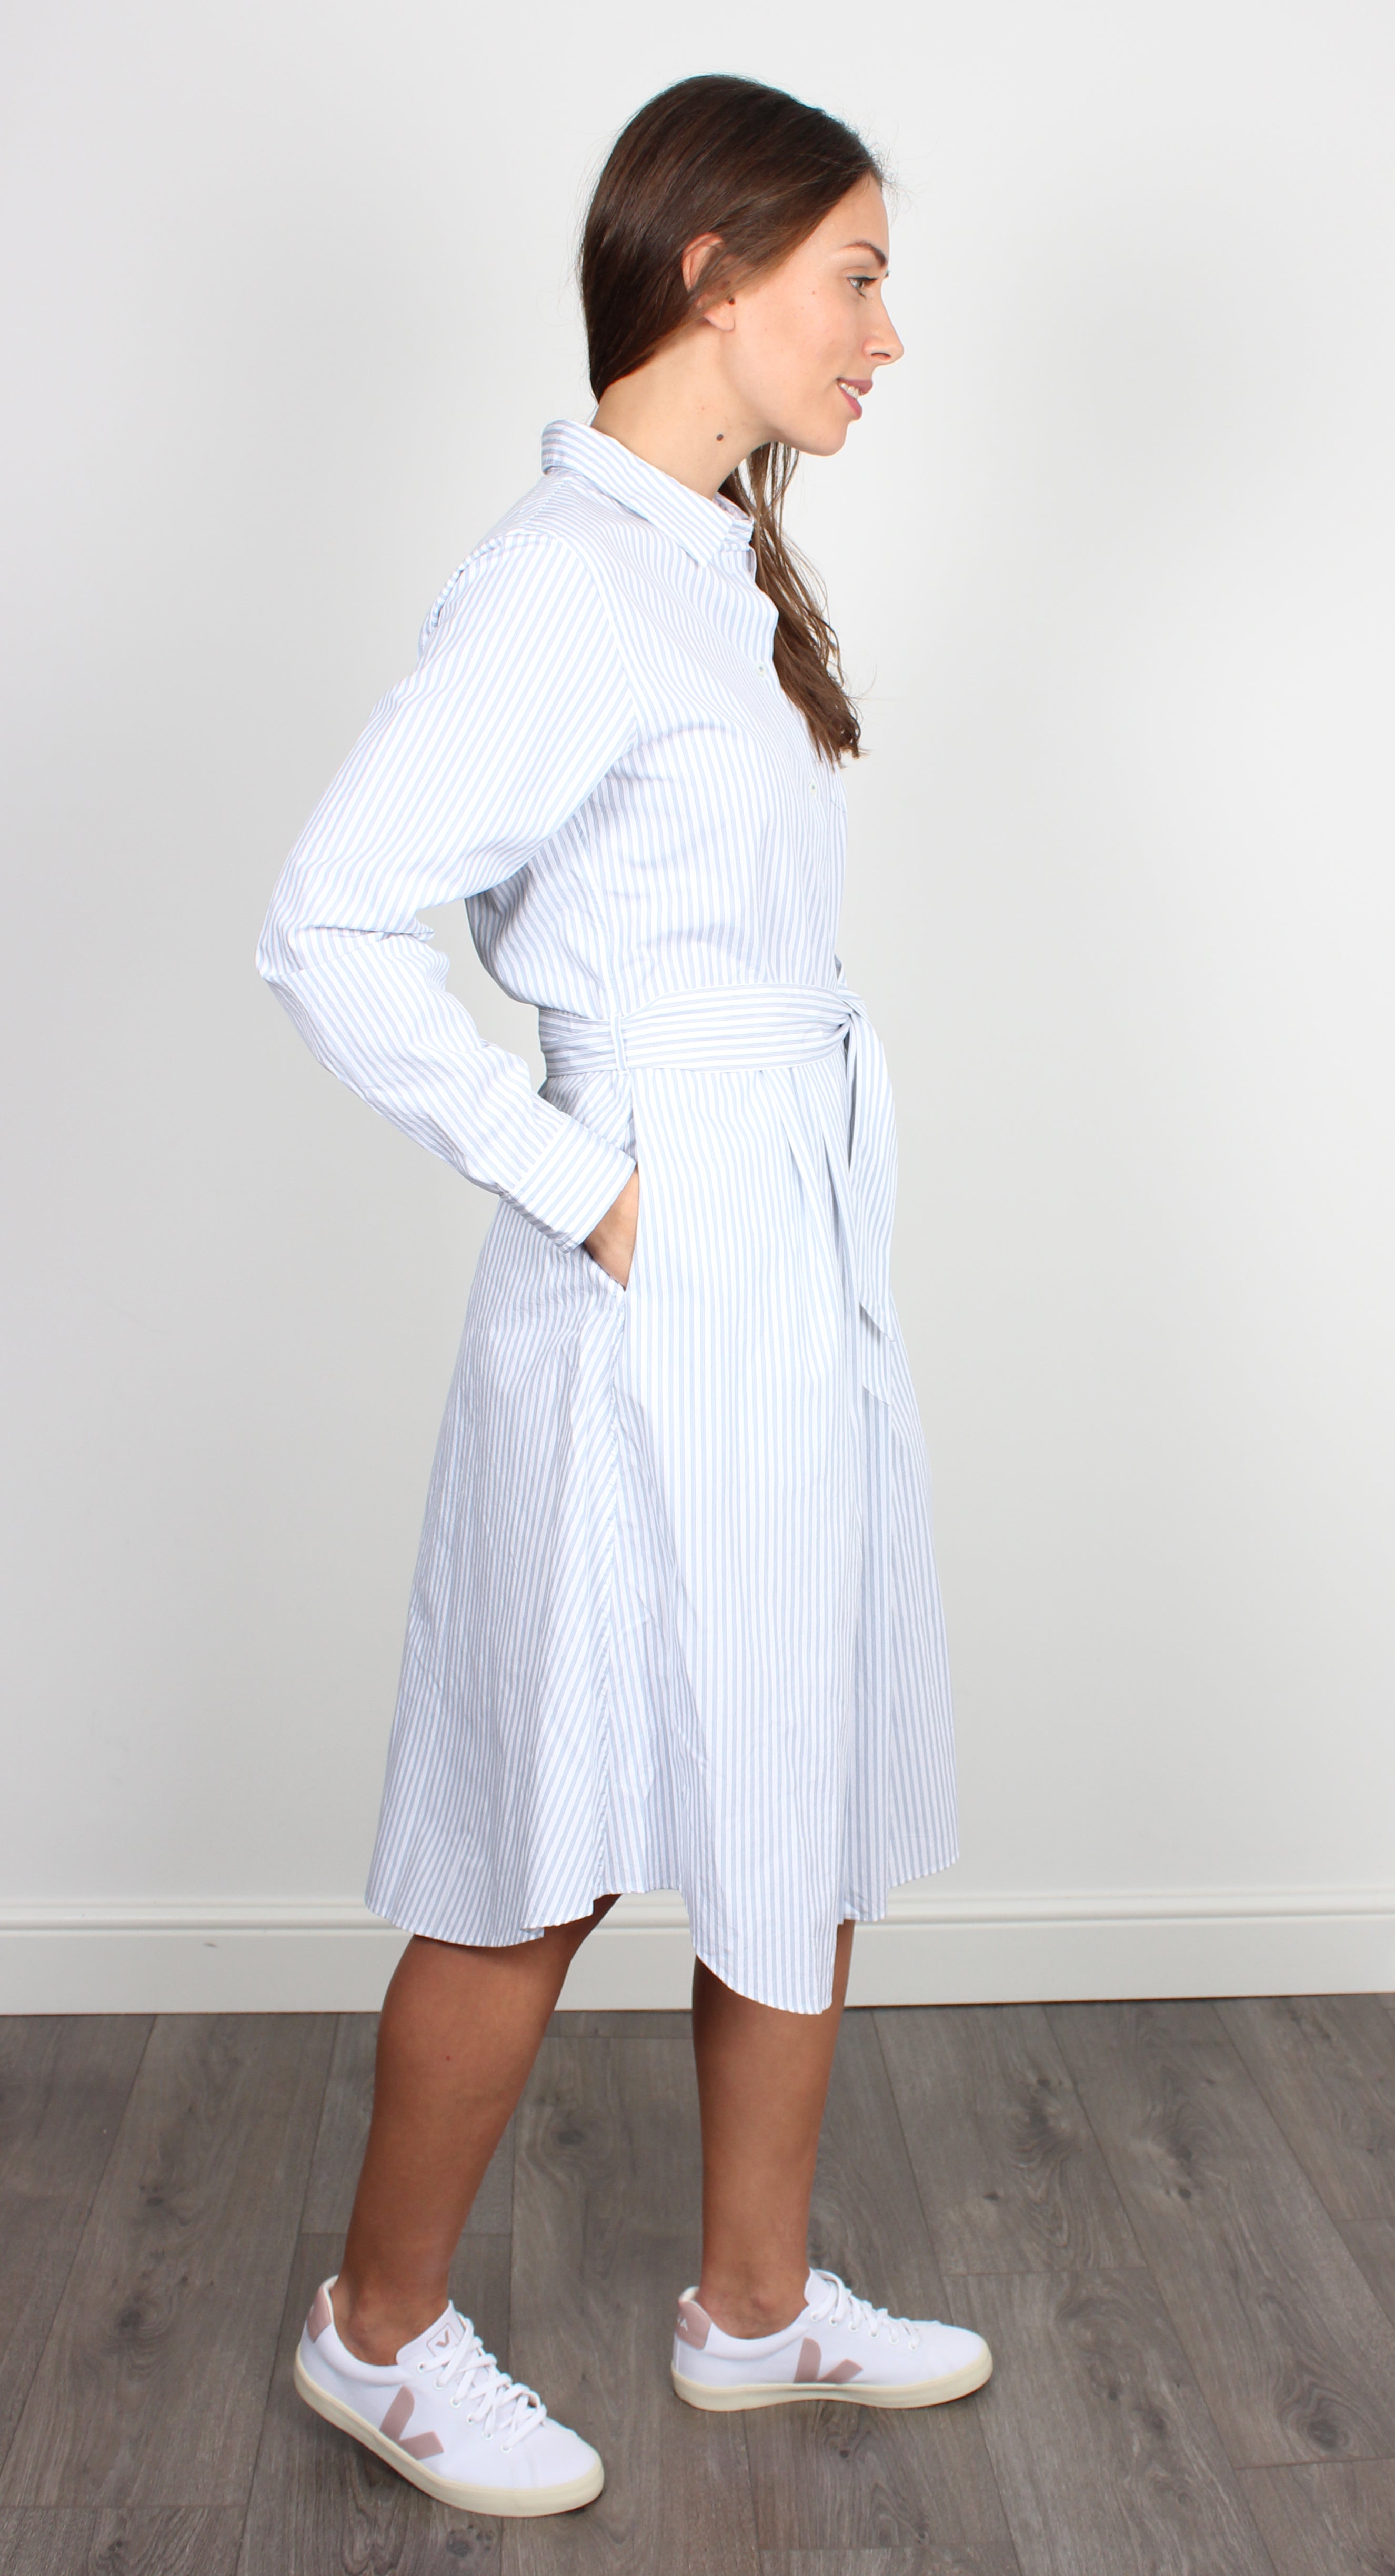 Bellerose Gisele striped cotton dress